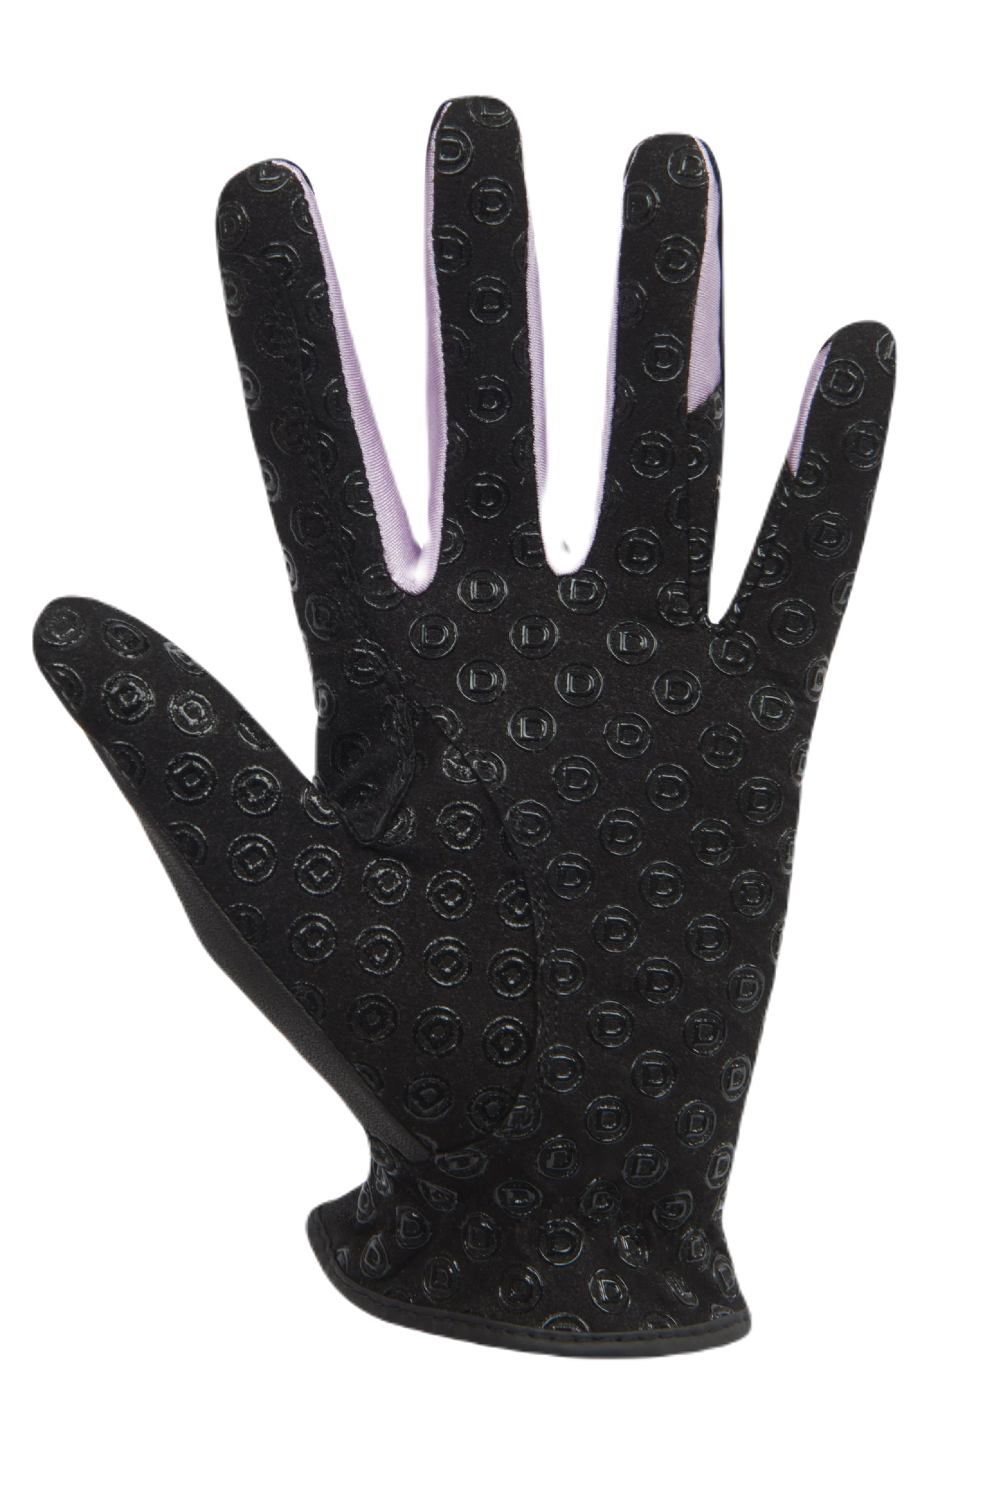 Dublin Cool-It Gel Riding Gloves In Black/Pink Back 